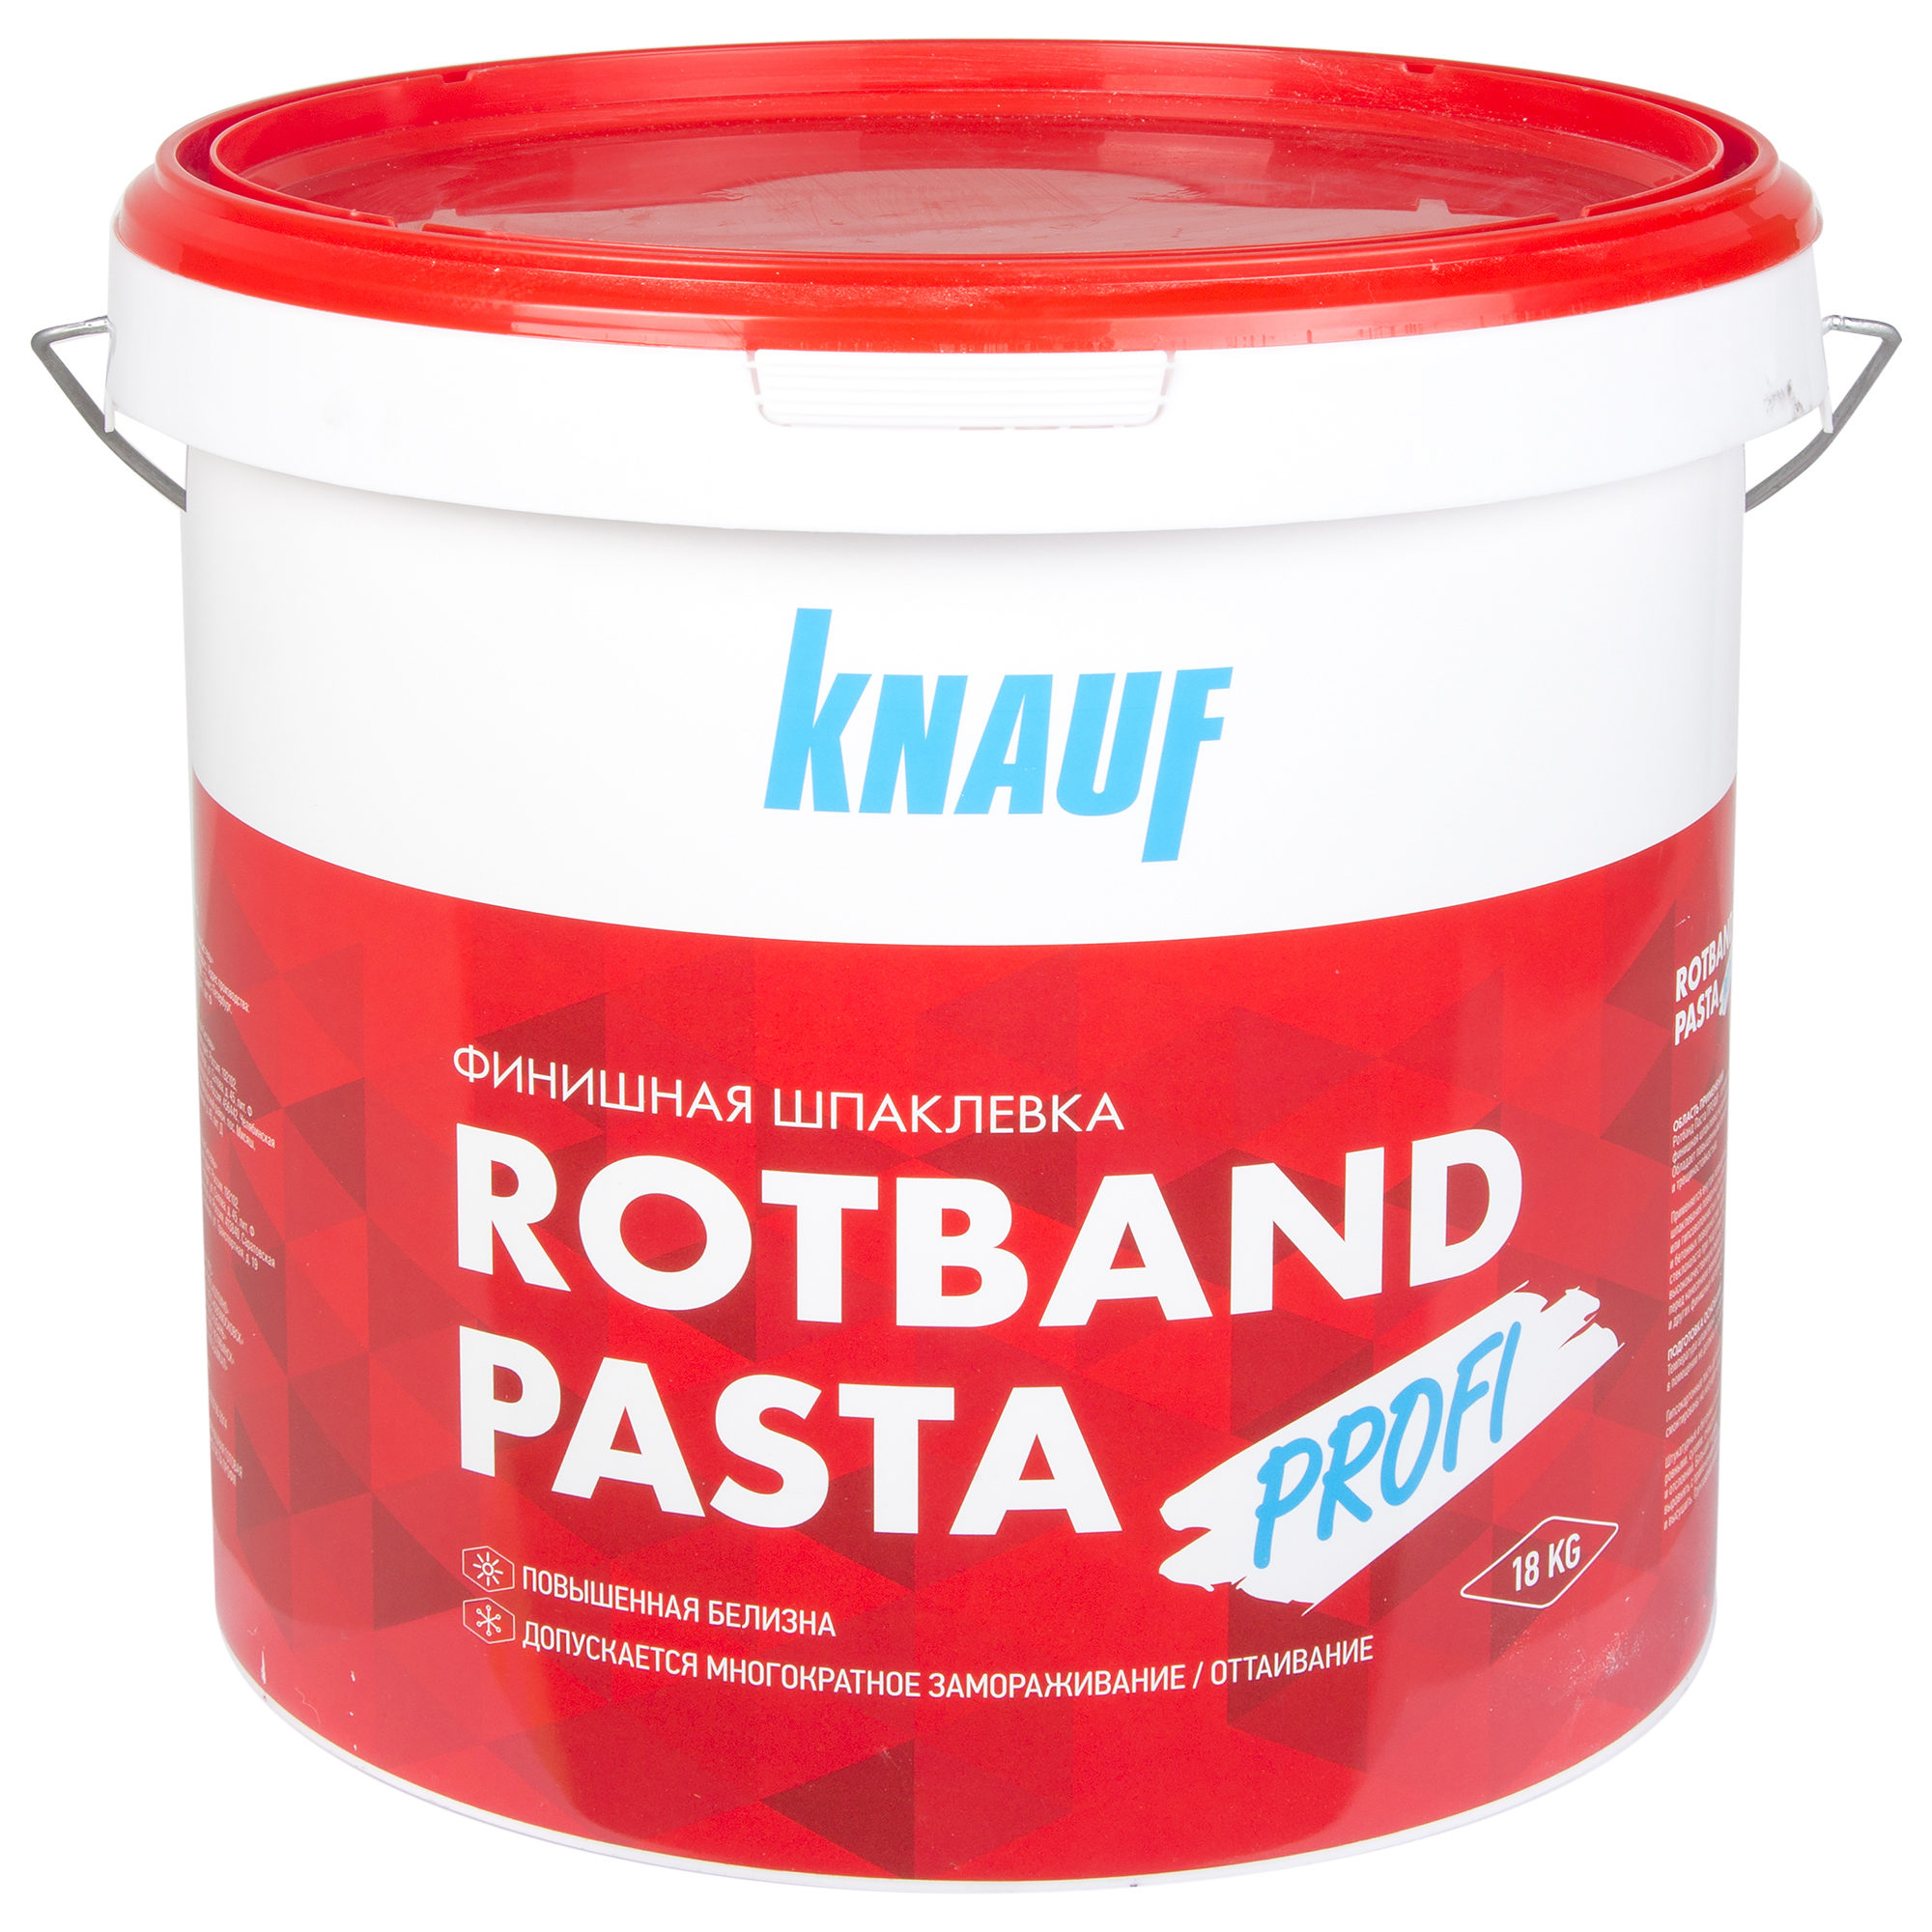 15058563 Шпаклёвка полимерная суперфинишная Ротбанд Паста 18 кг Rotband pasta STLM-0005280 KNAUF